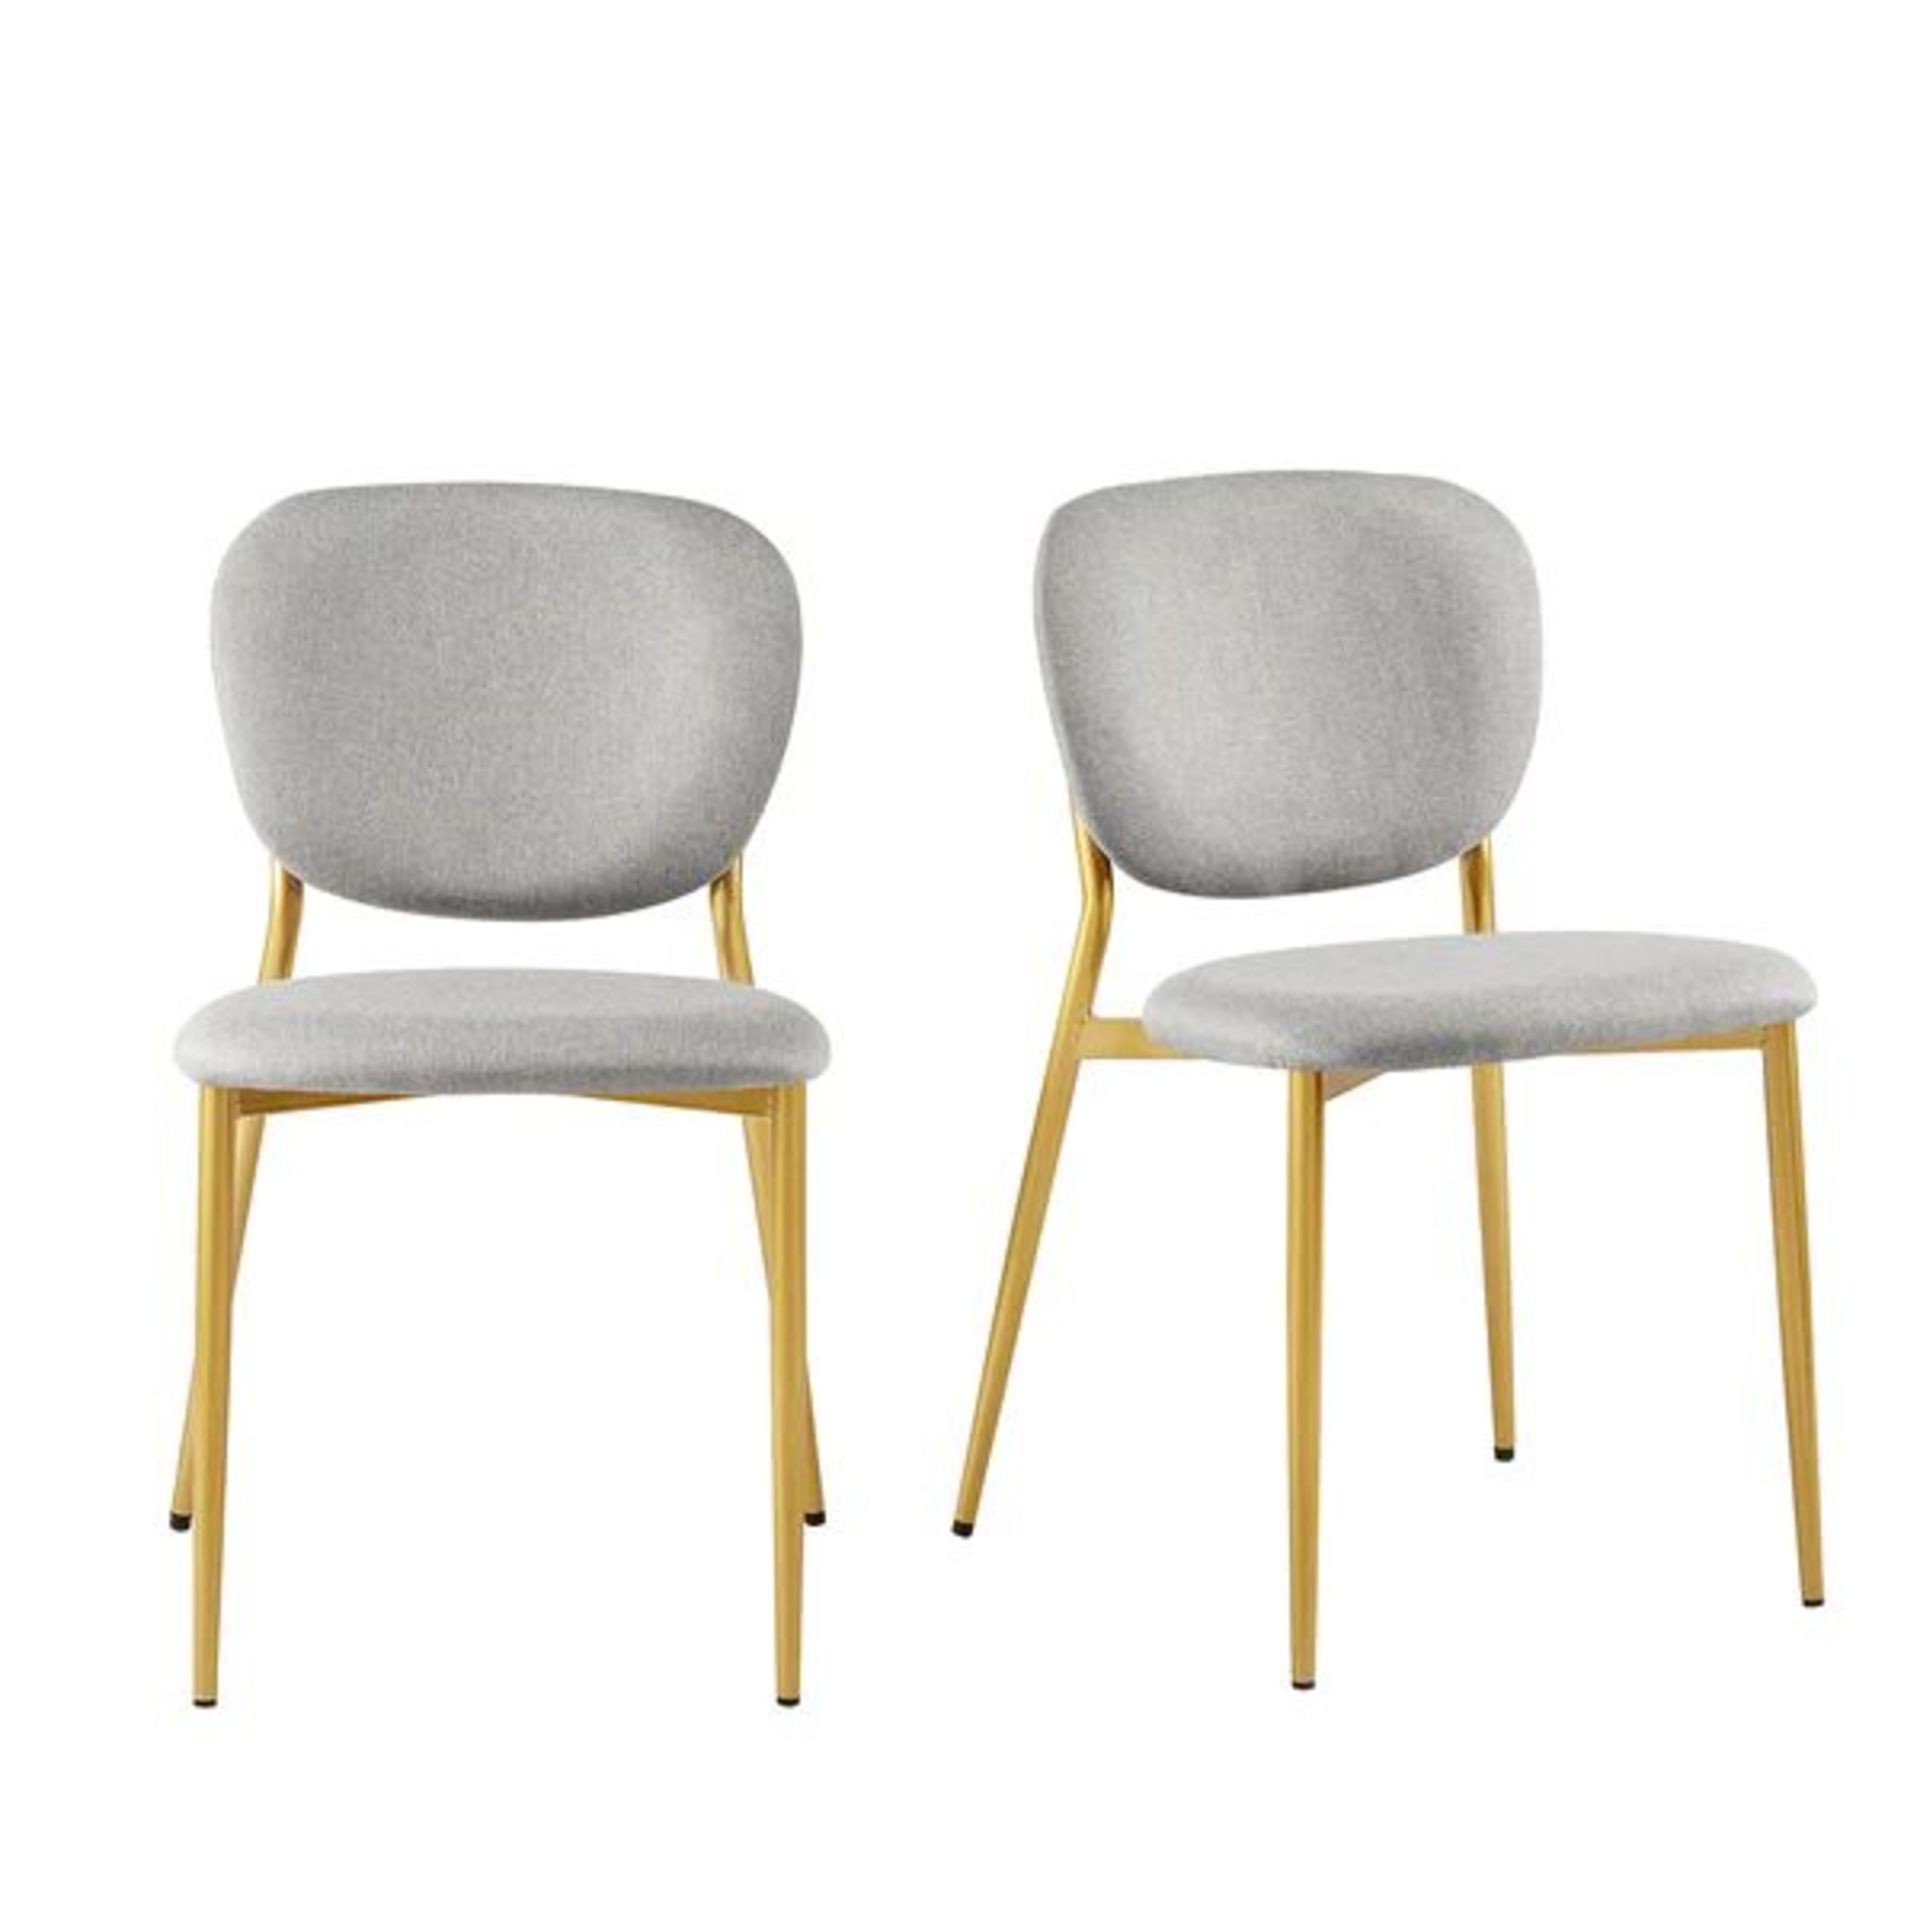 Kelmarsh Set of 2 Light Grey Fabric Upholstered Dining Chairs. - R14. RRP £219.00. Our Kelmarsh - Image 2 of 2